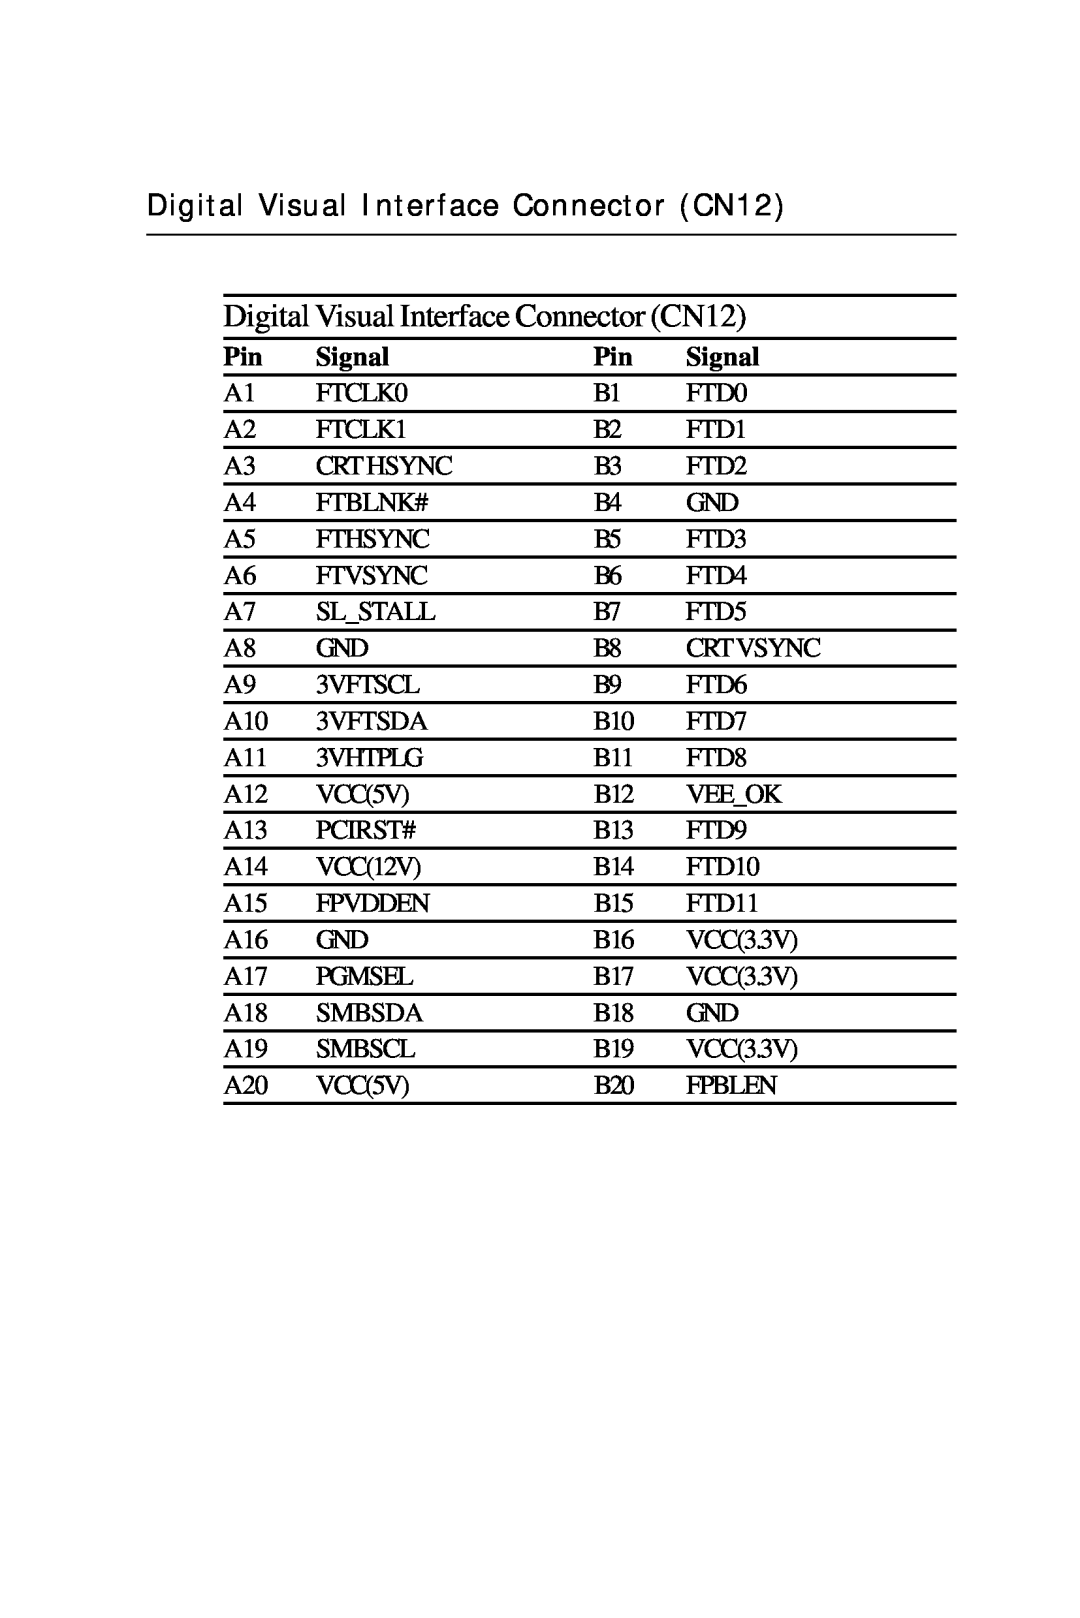 Intel PCM-6896 manual Digital Visual Interface Connector CN12 